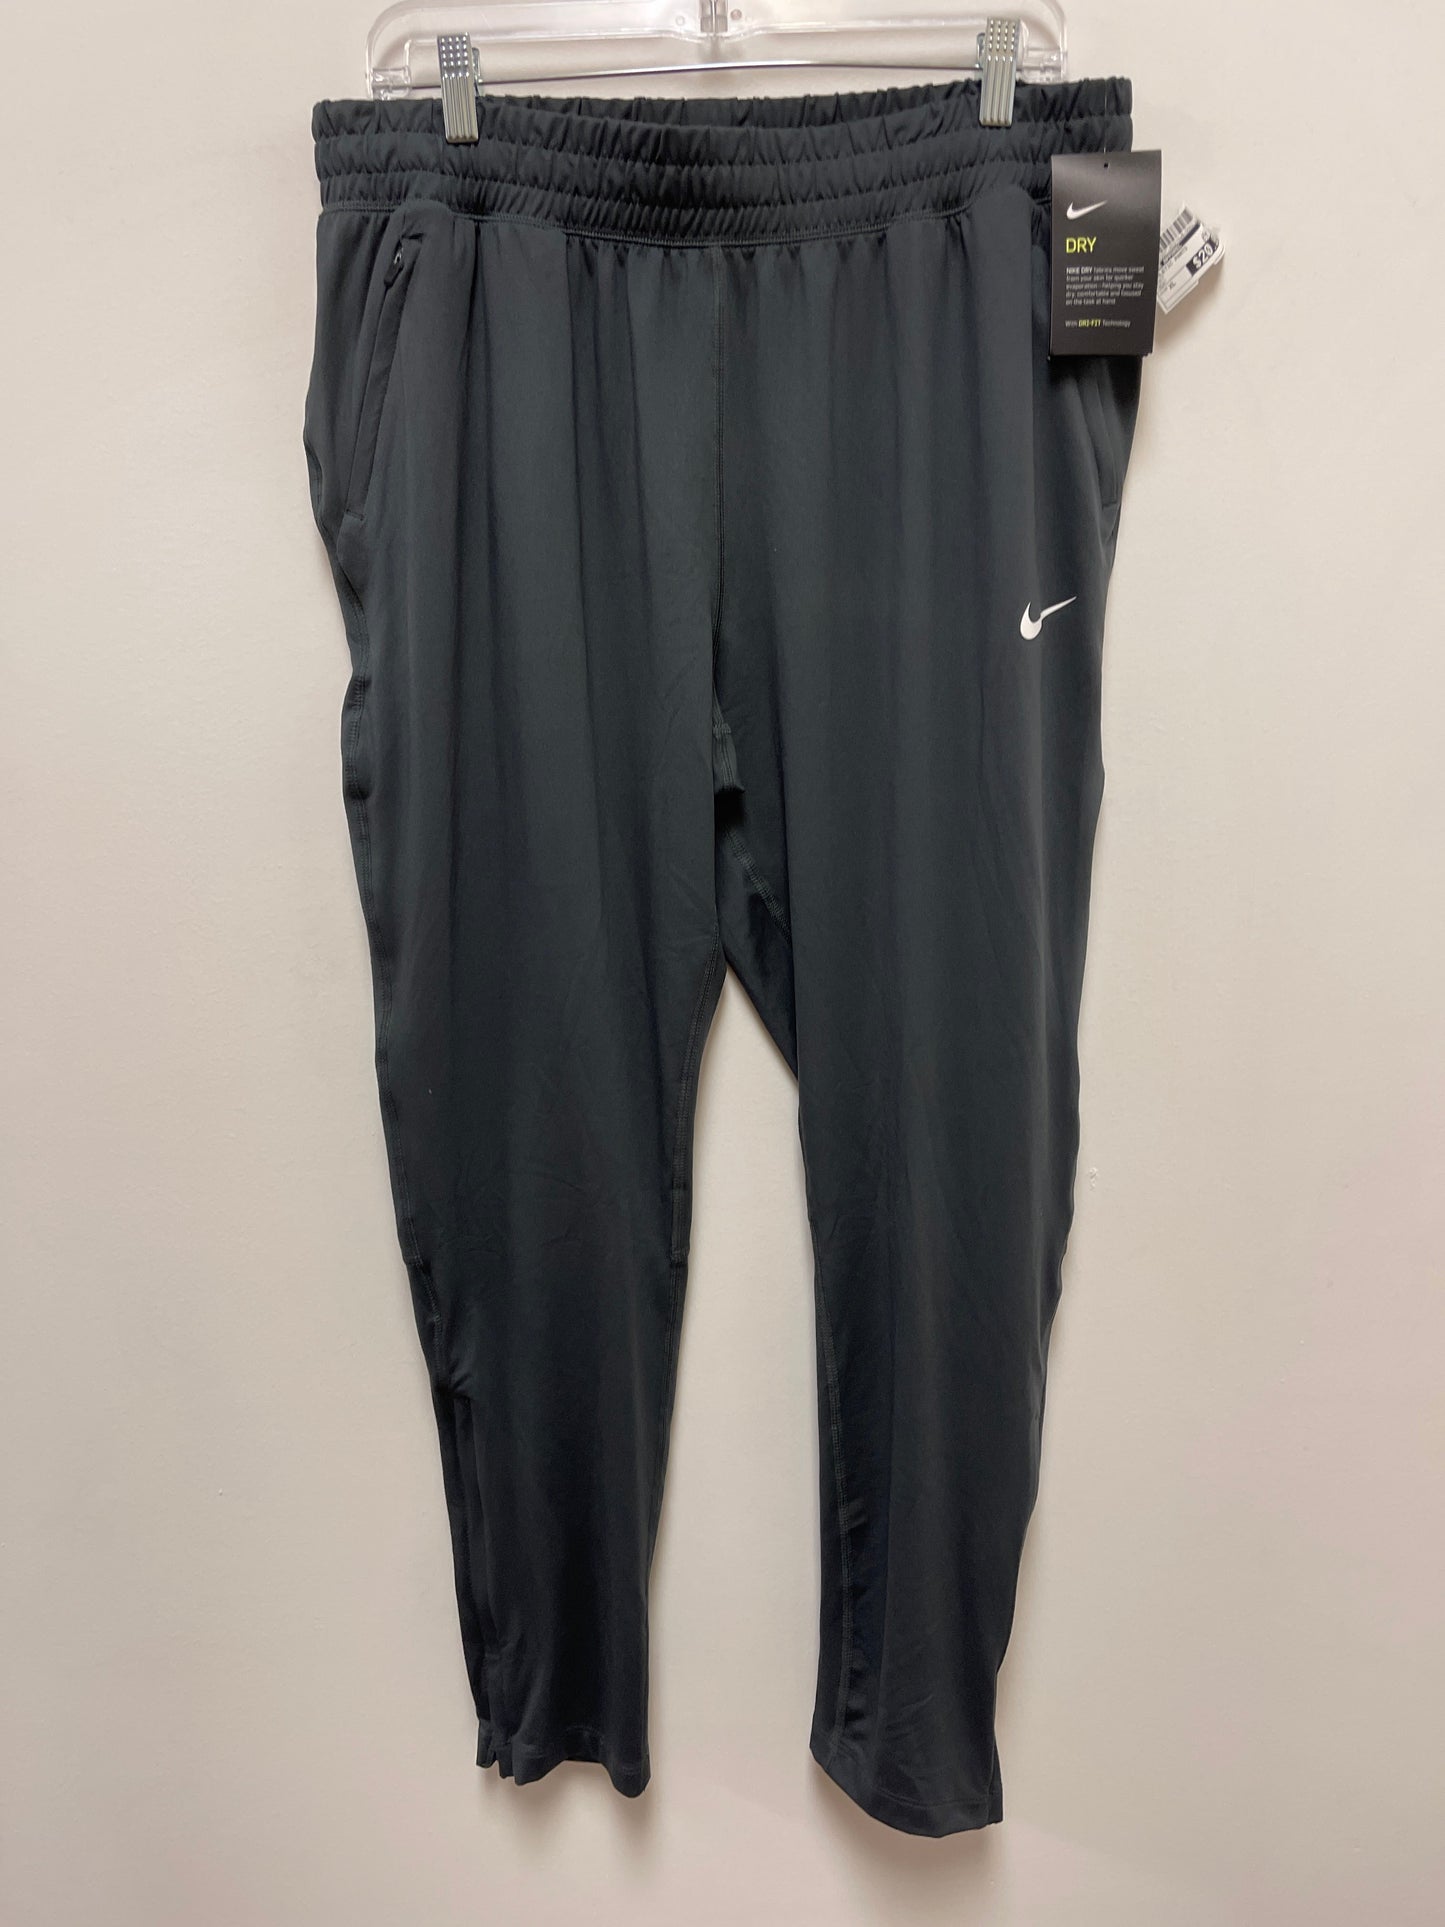 Grey Athletic Pants Nike Apparel, Size Xl